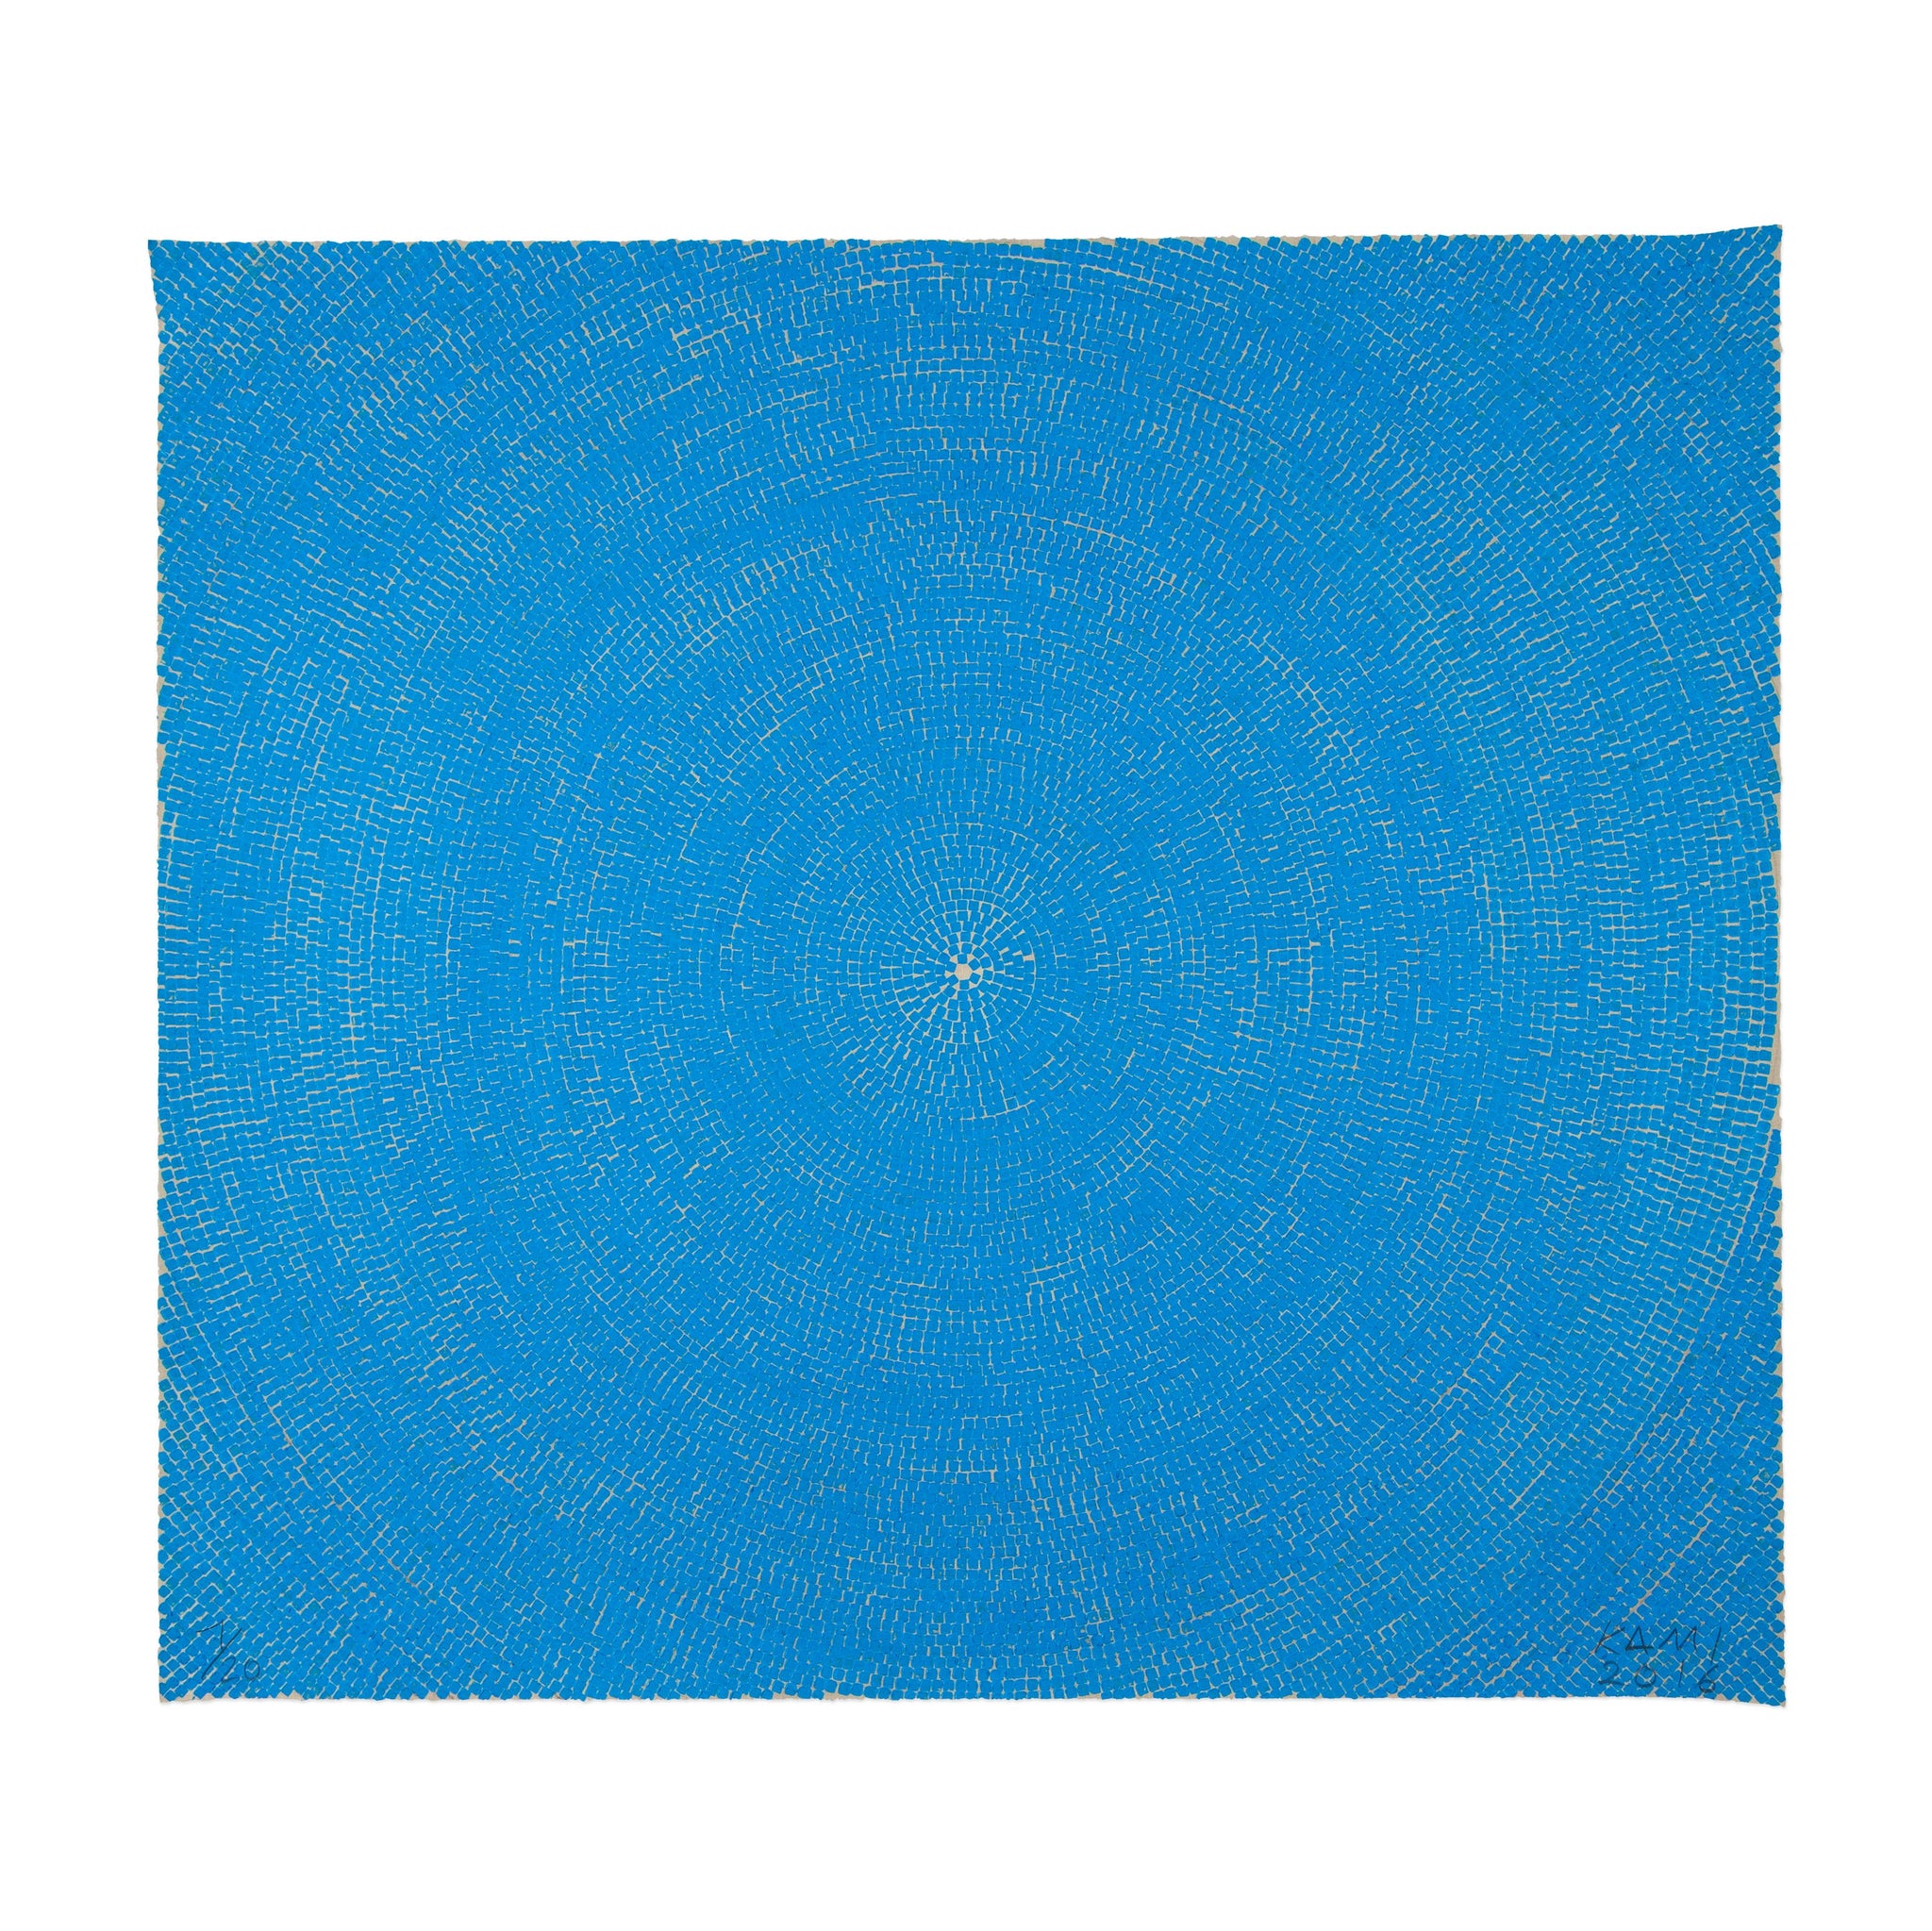 Y.Z. Kami: Blue Dome print